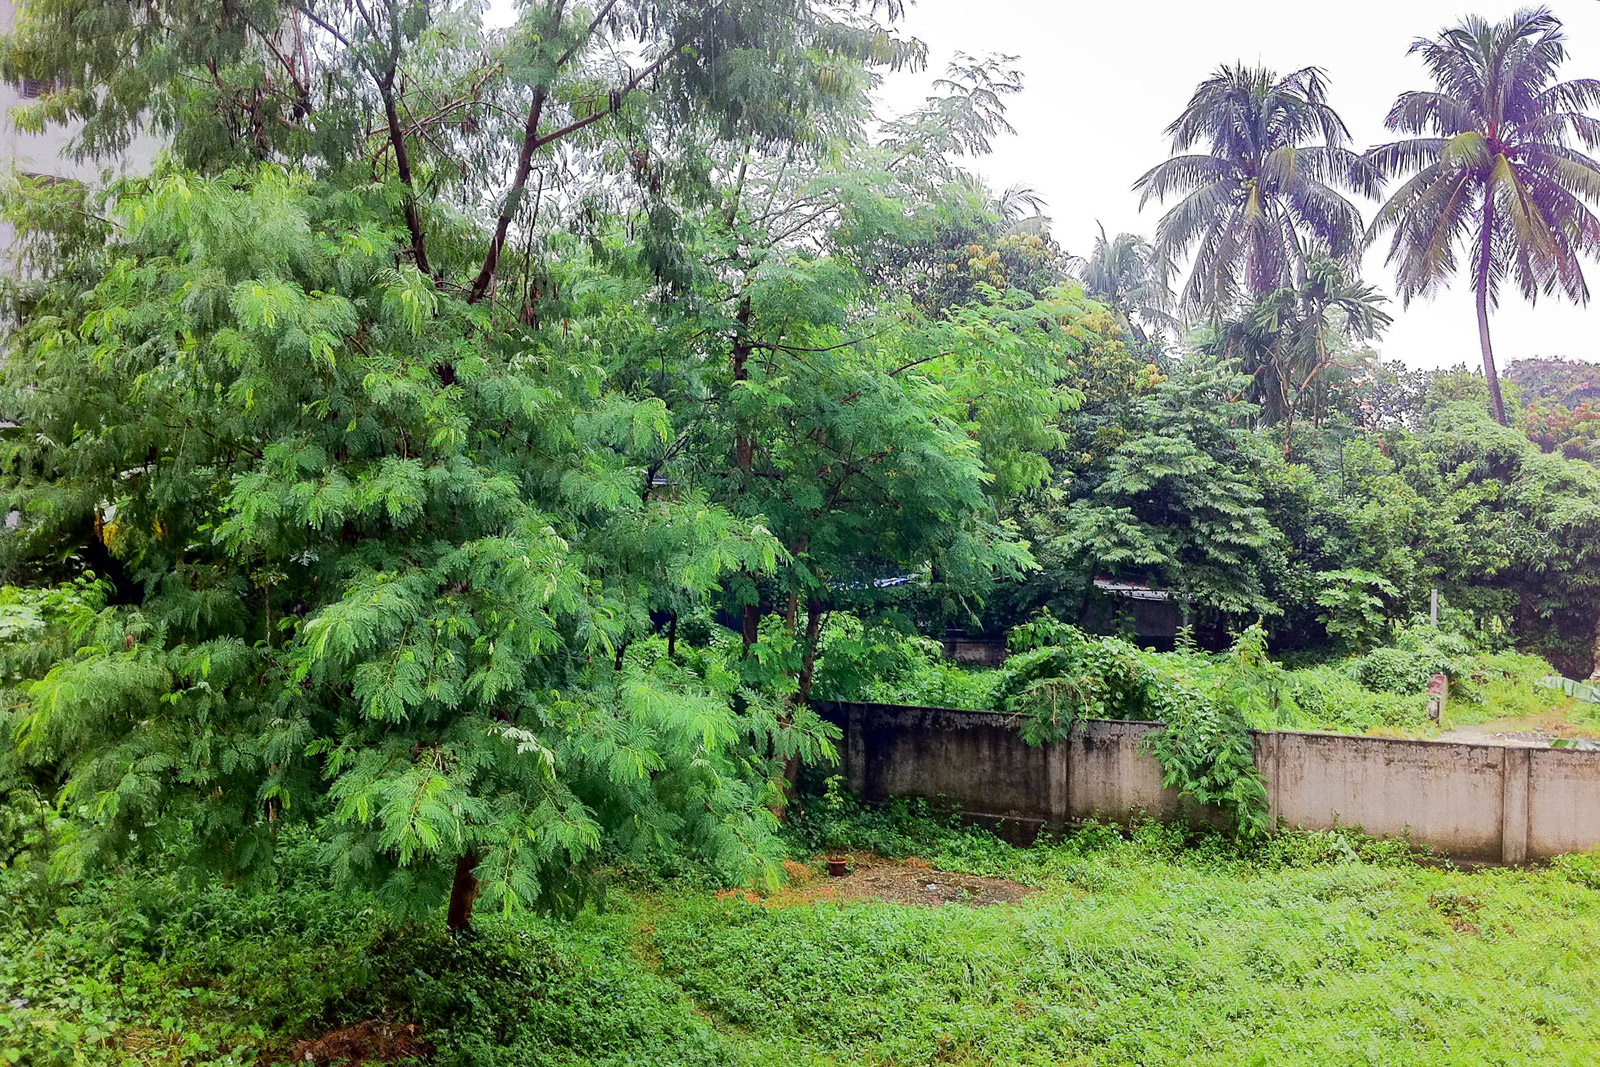 malai-coconut-trees-height